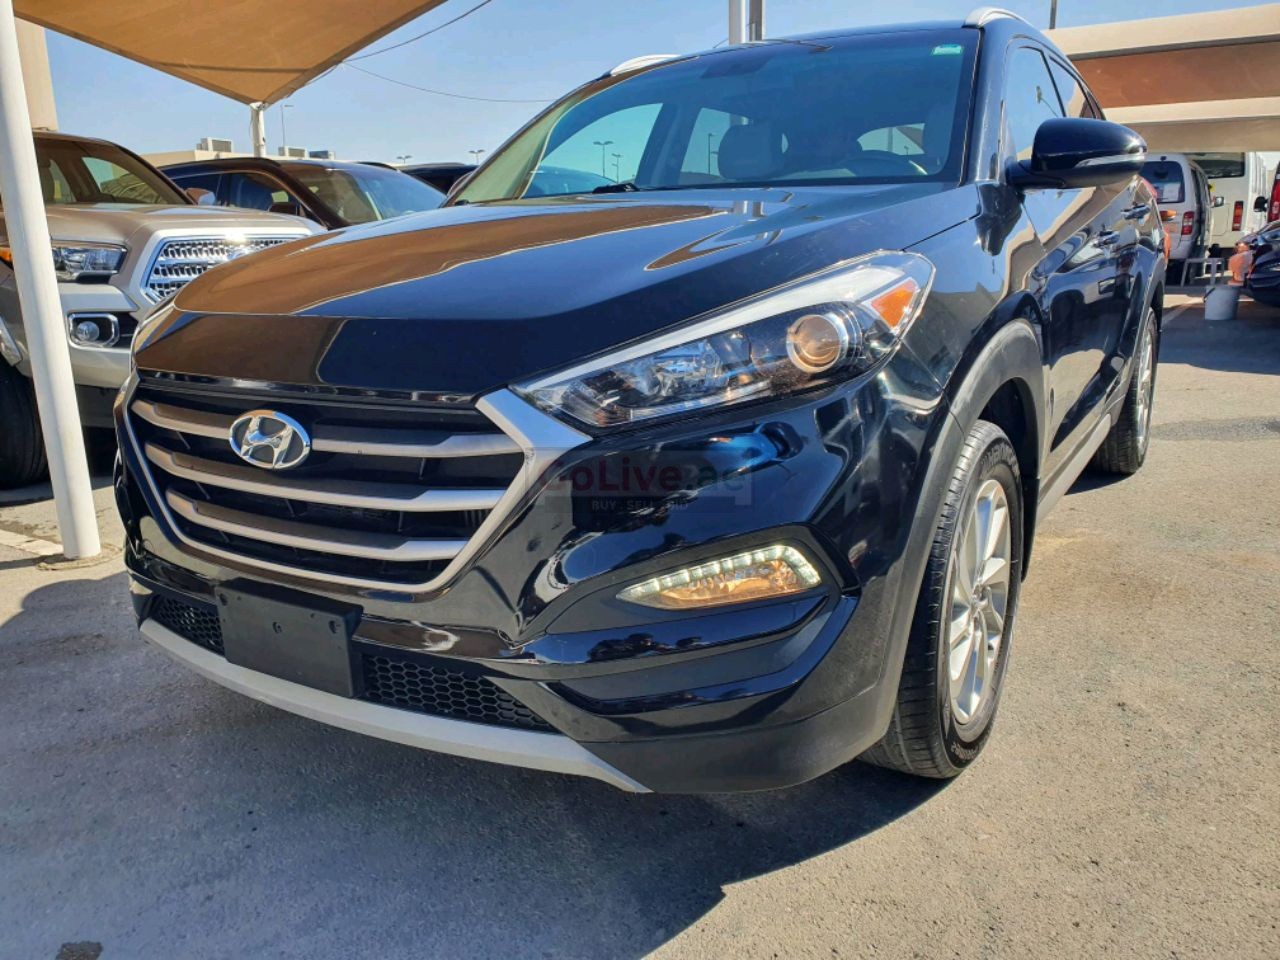 Hyundai Tucson 2017 FOR SALE